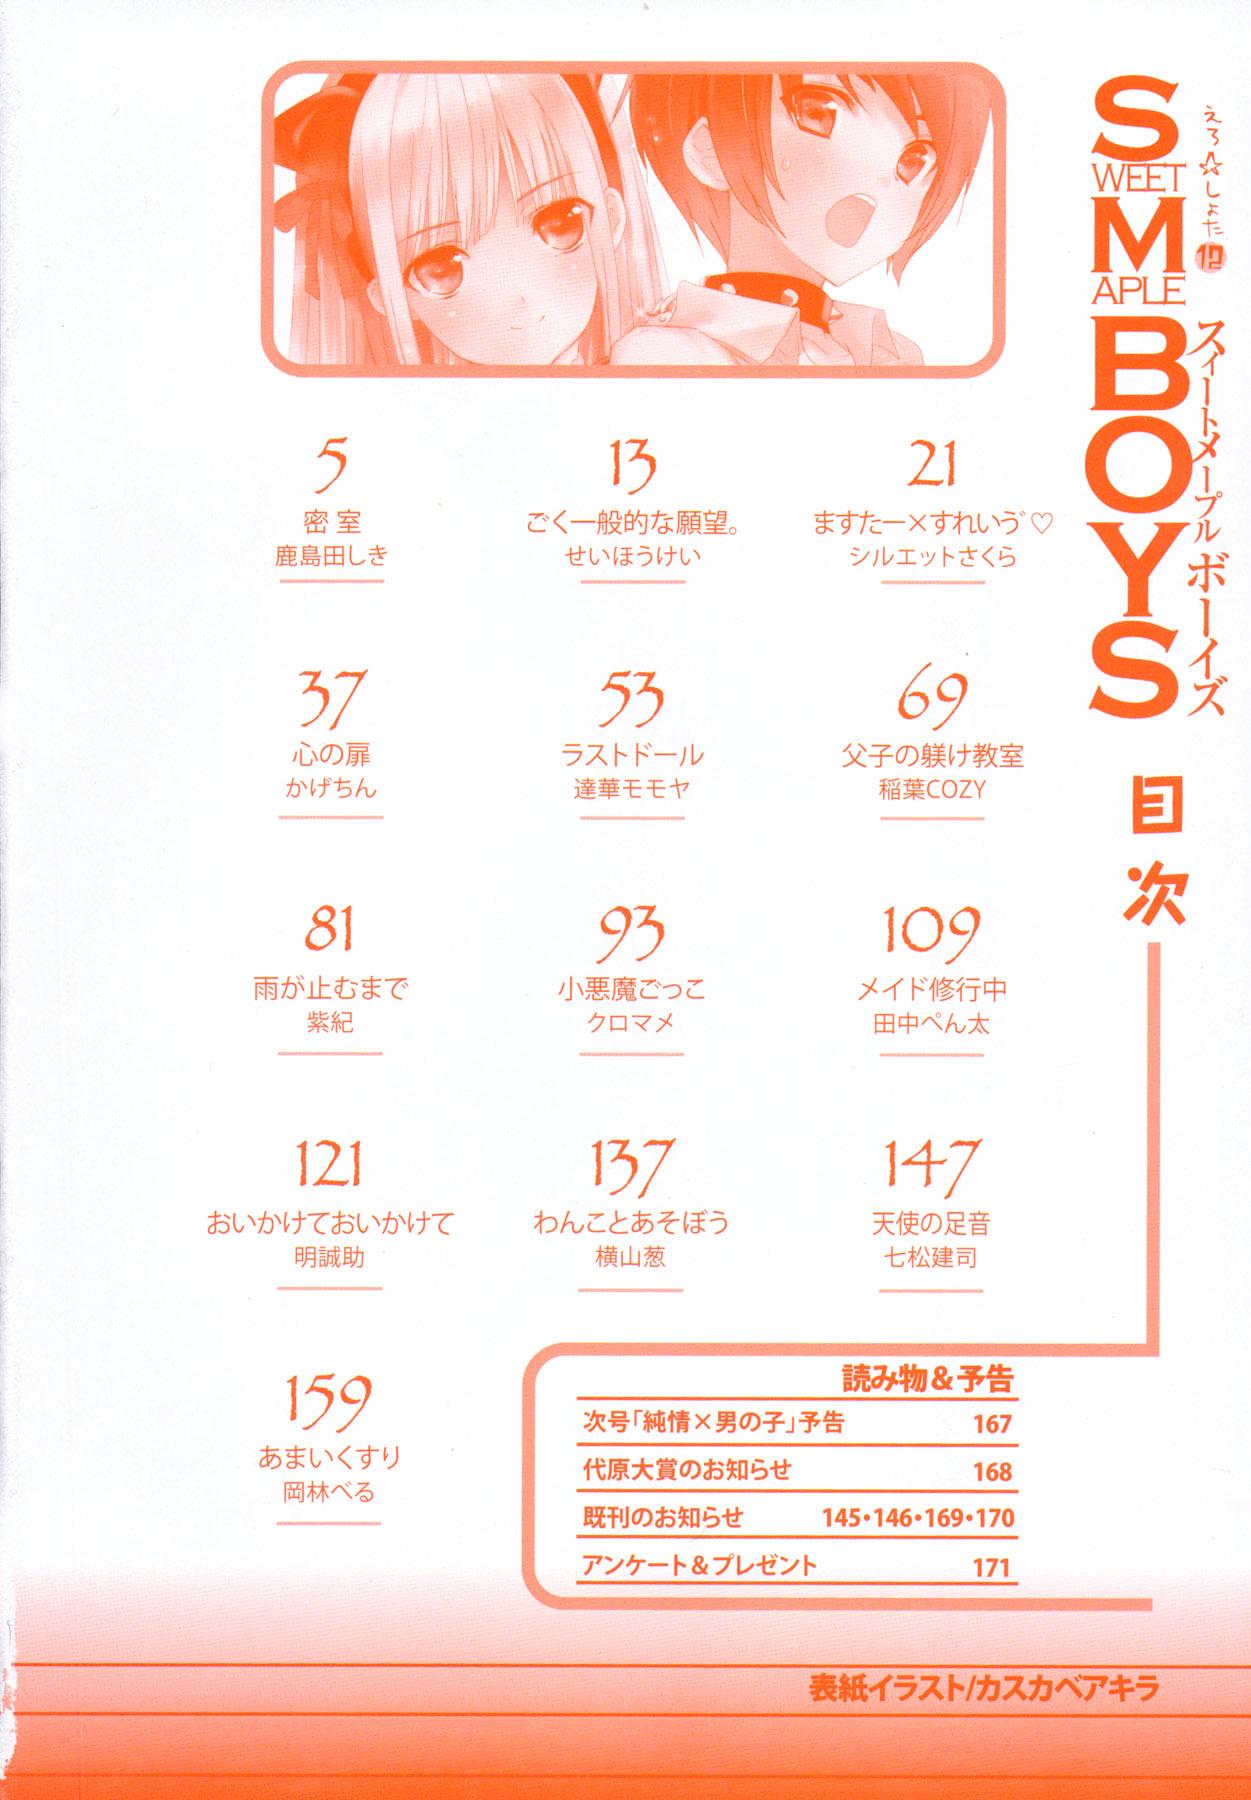 Swallow Ero Shota 12 - Sweet Maple Boys Big - Page 3